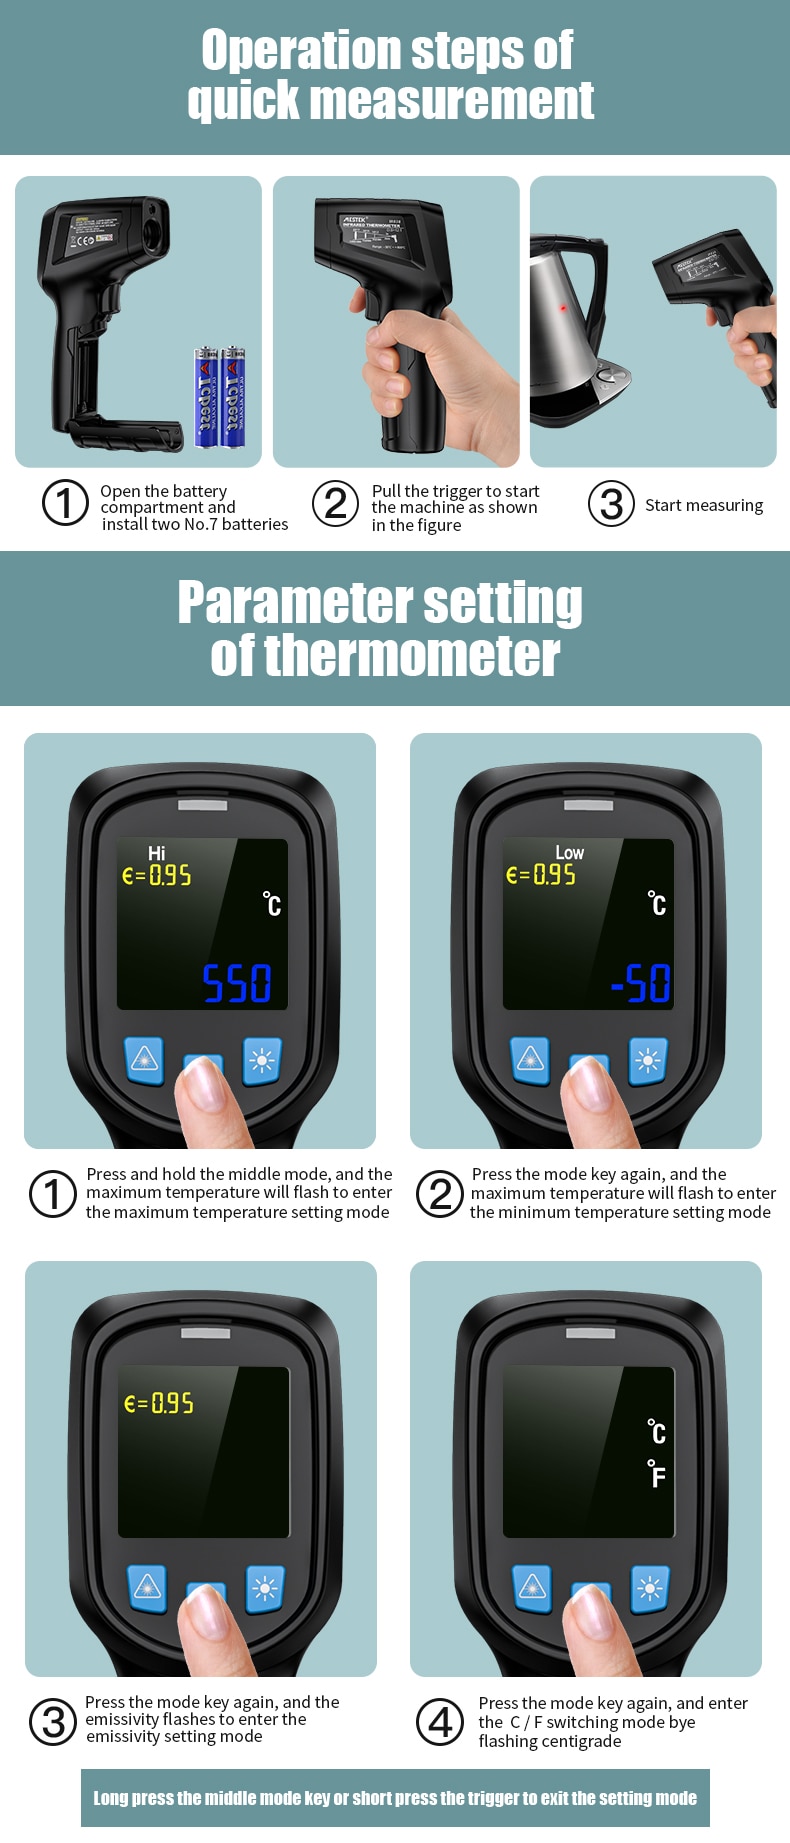 IR03A IR03B Digital Infrared Thermometer